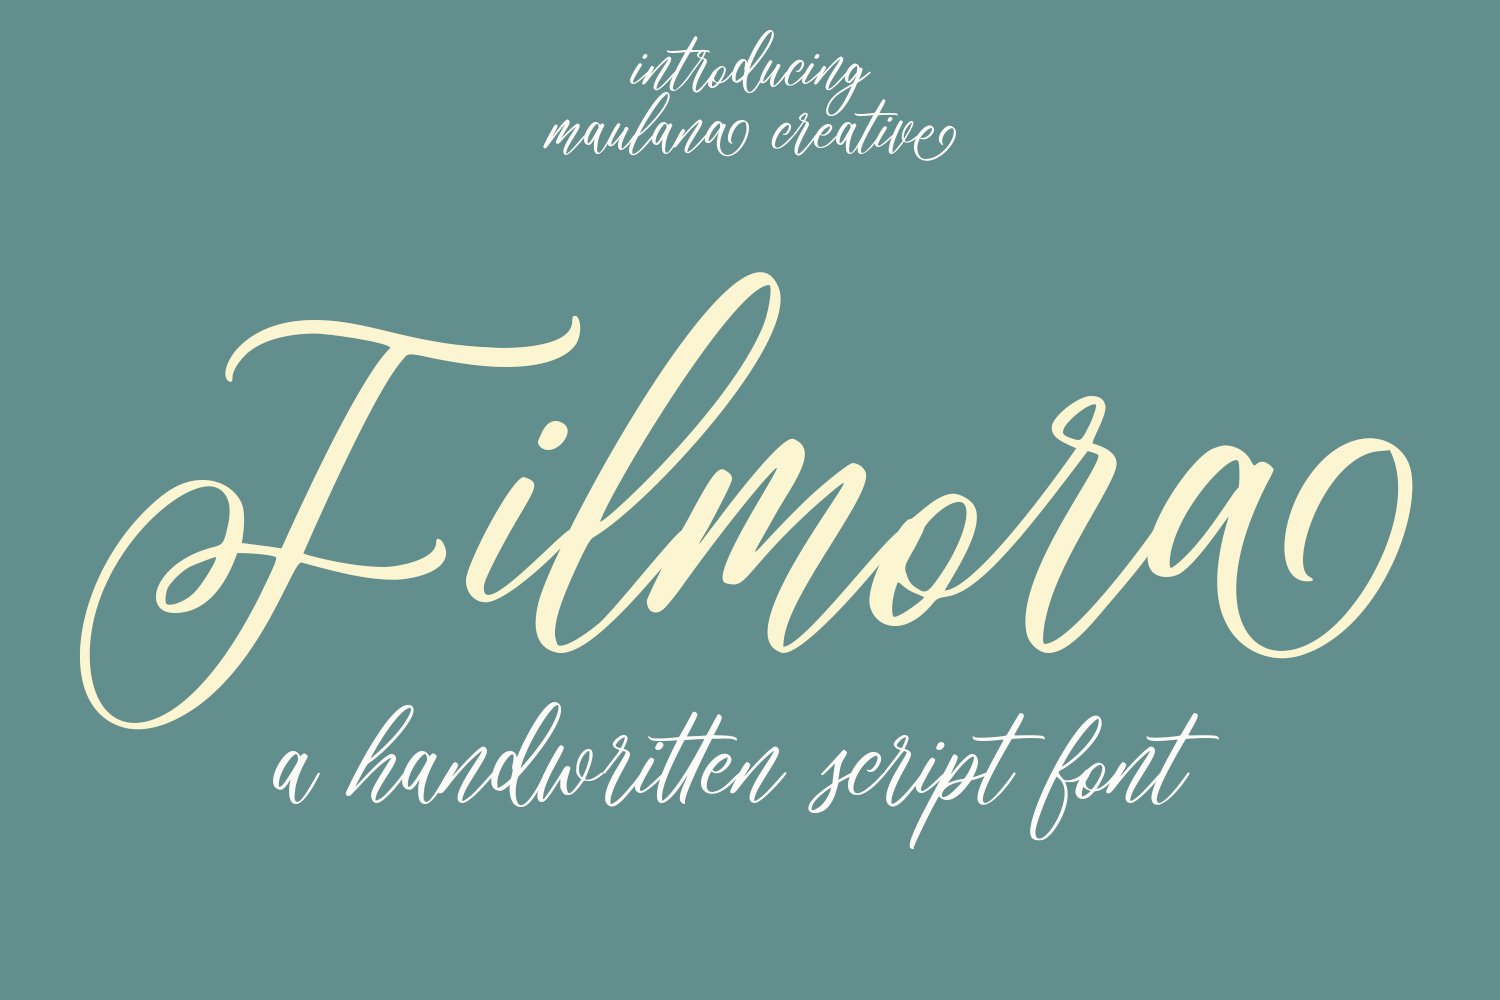 Filmora Script Font cover image.